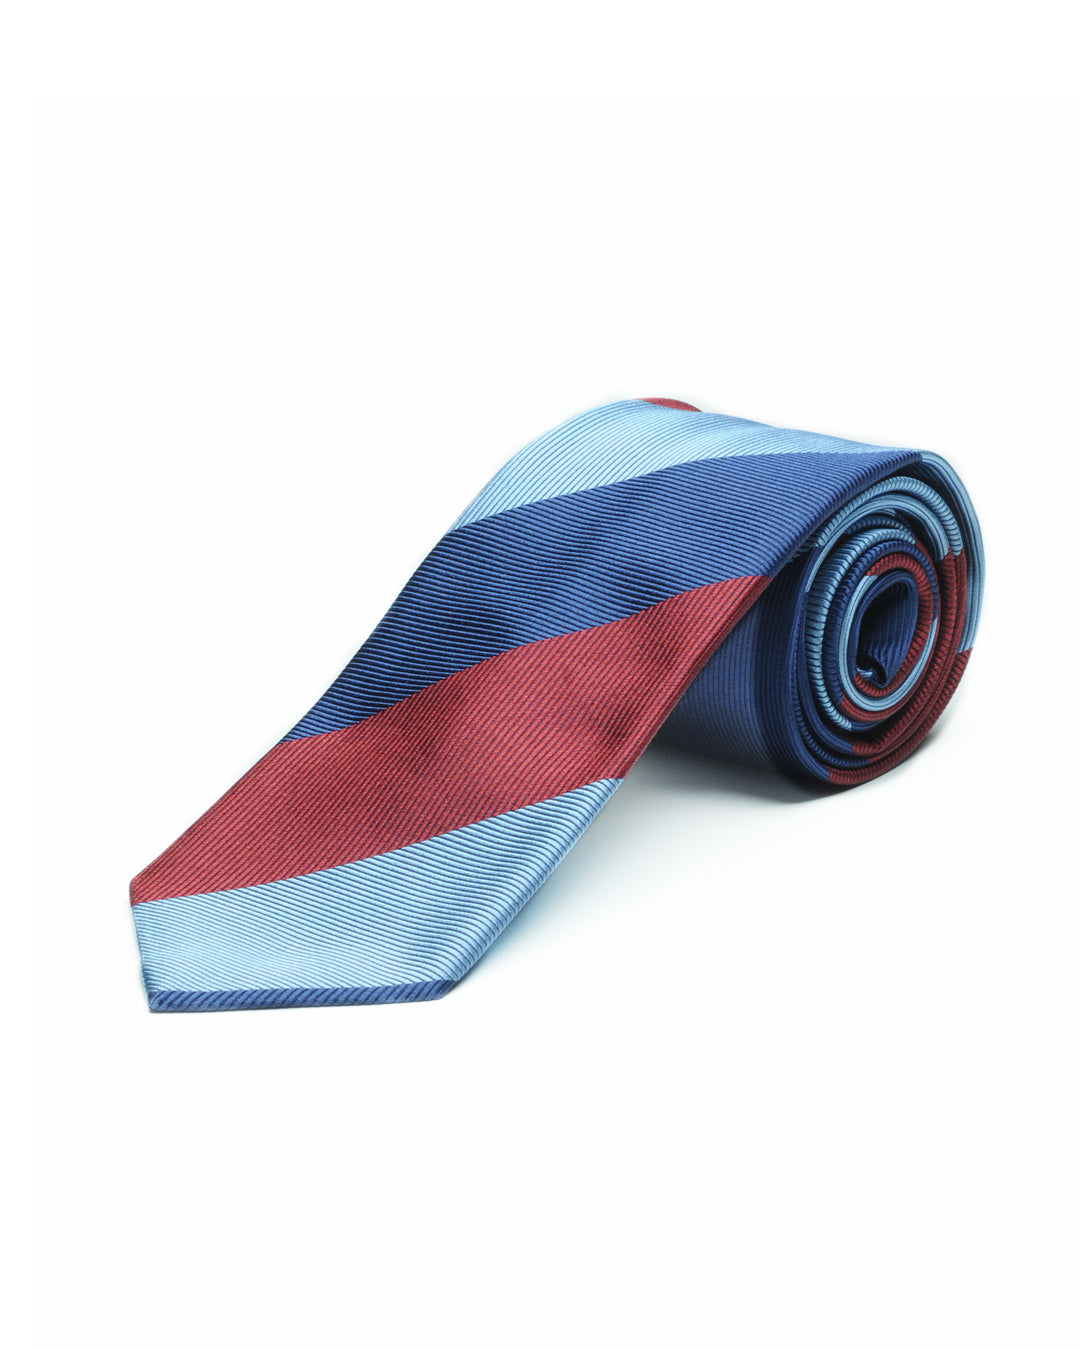 Cravatta jacquard riga pari pari navy, bordeaux e azzurro